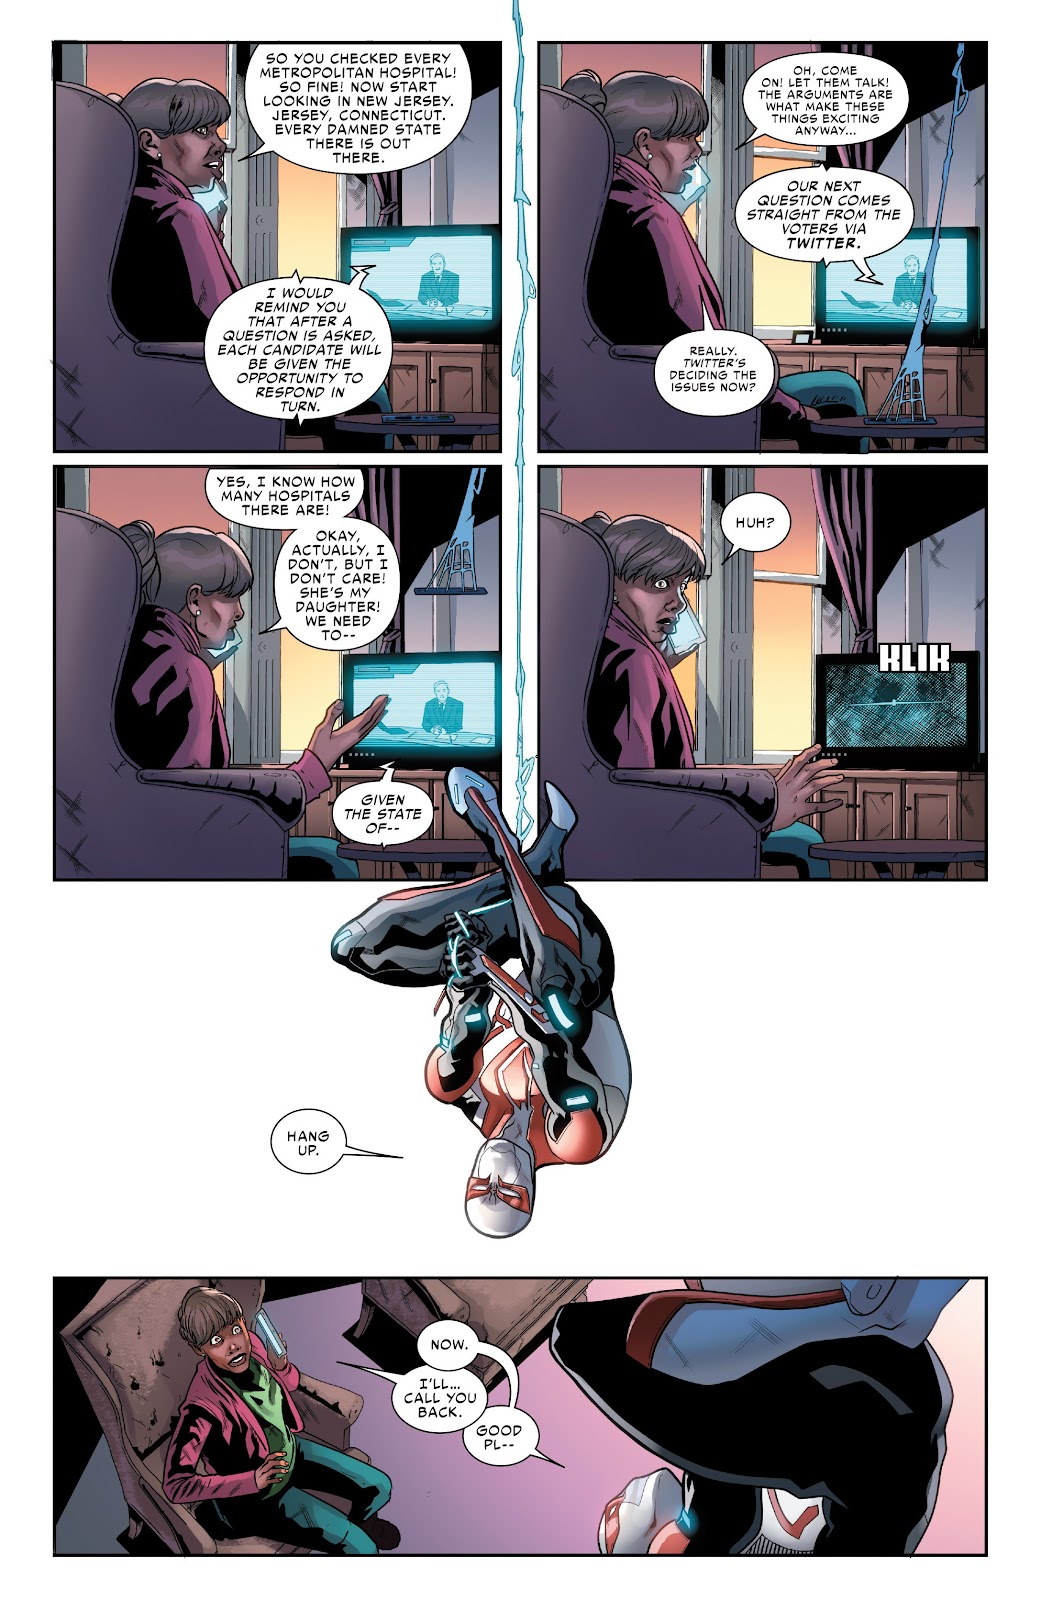 Spider-Man 2099 (2015) issue 9 - Page 15